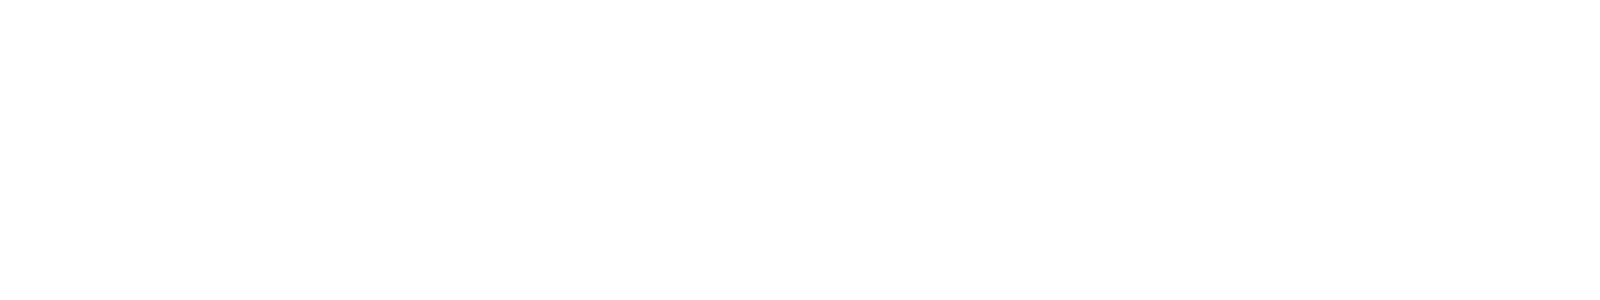 Panama Handbook Banner (4)